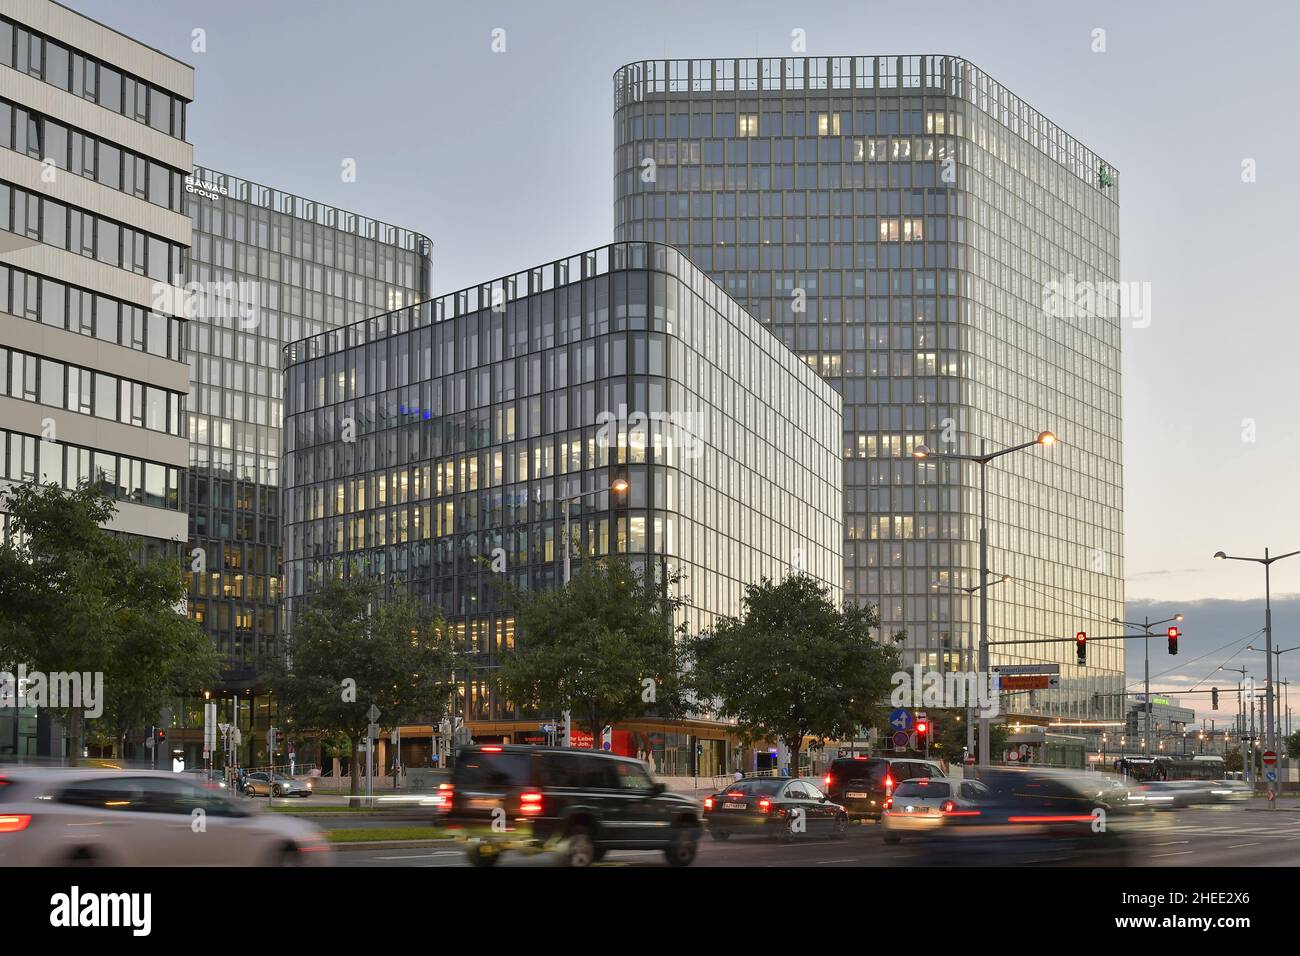 Modern glass office buildings and driveway at dusk, Wiener Gürtel road in Vienna Austria. Stock Photo